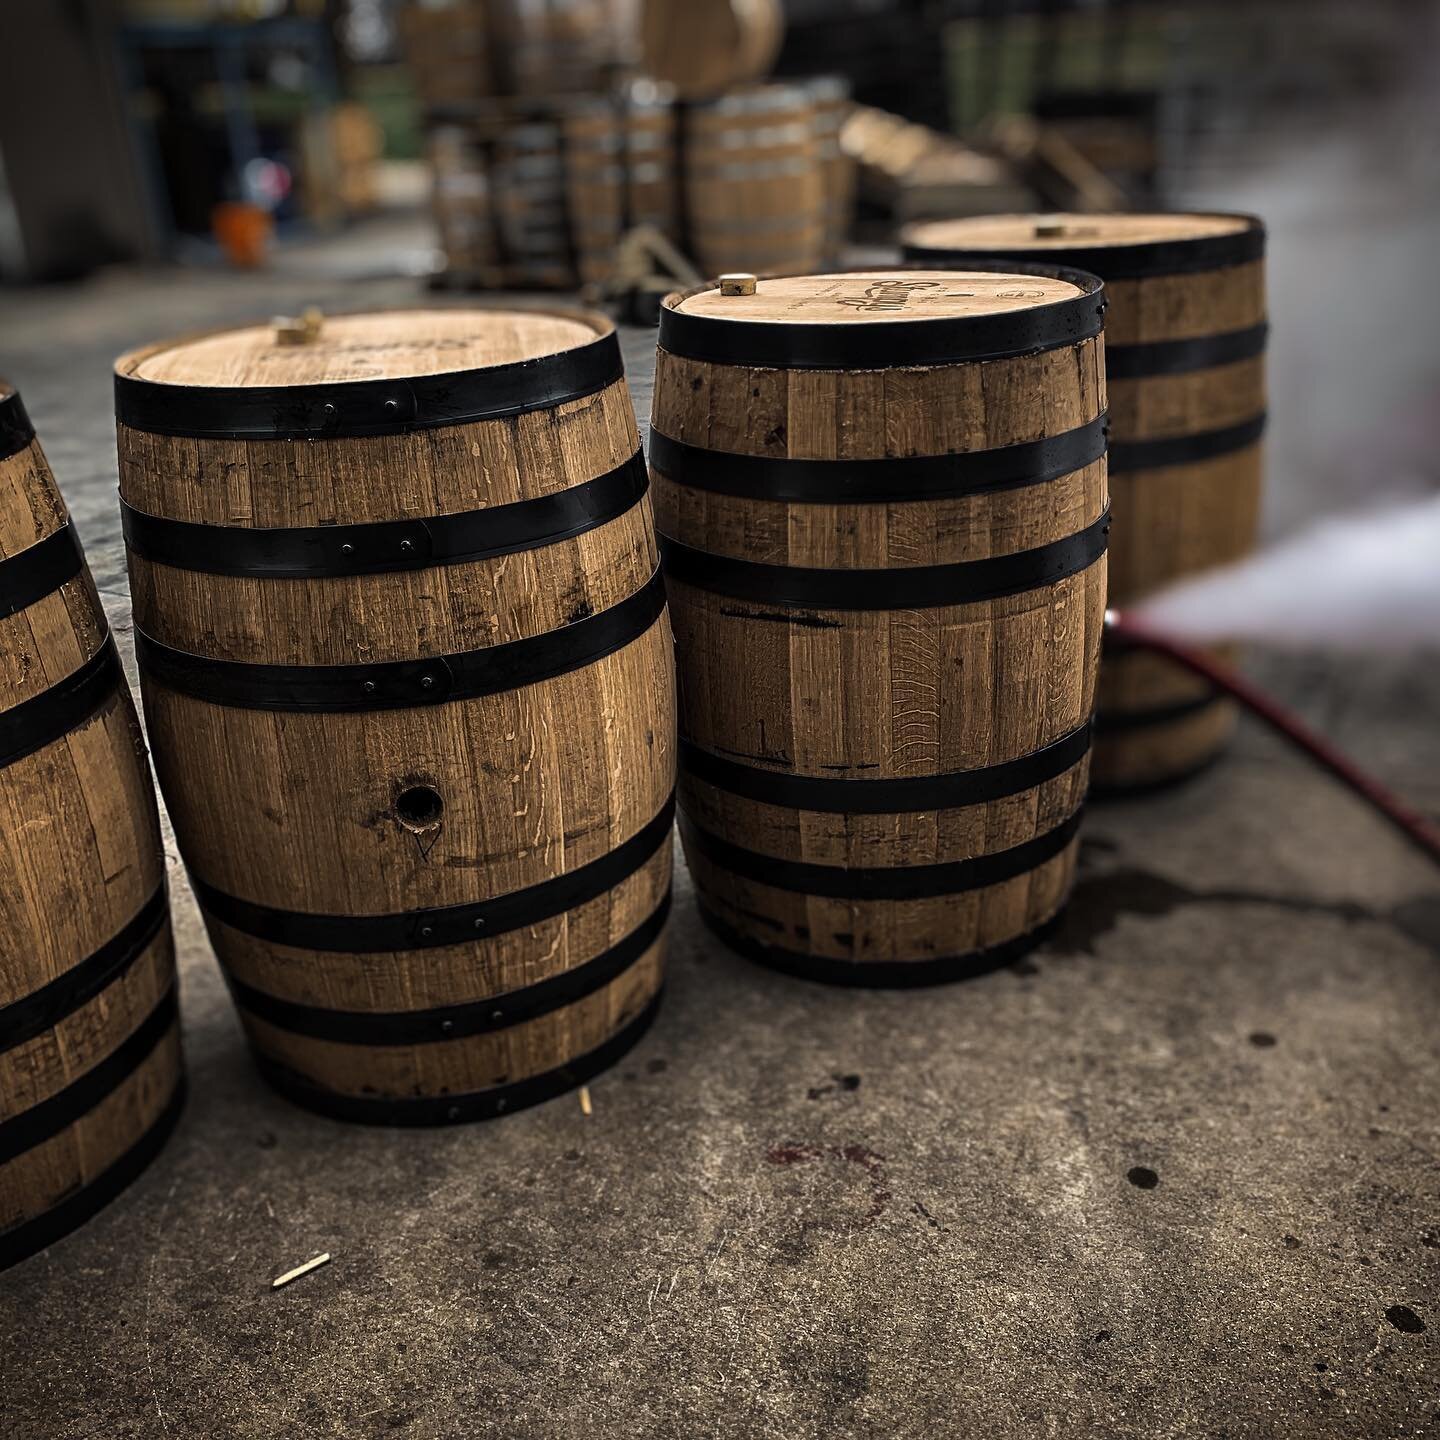 Getting more whiskey in barrels. 
&bull;
&bull;
&bull;
&bull;
#craftbourbon #craftdistillery #corn #bloodybutcher #bloodybutchercorn #handcrafted #illinoiswhiskey #craft #whiskey #bourbon #wood #barrels #handmade #hamdcraftedfromthegroundup #craftwhi